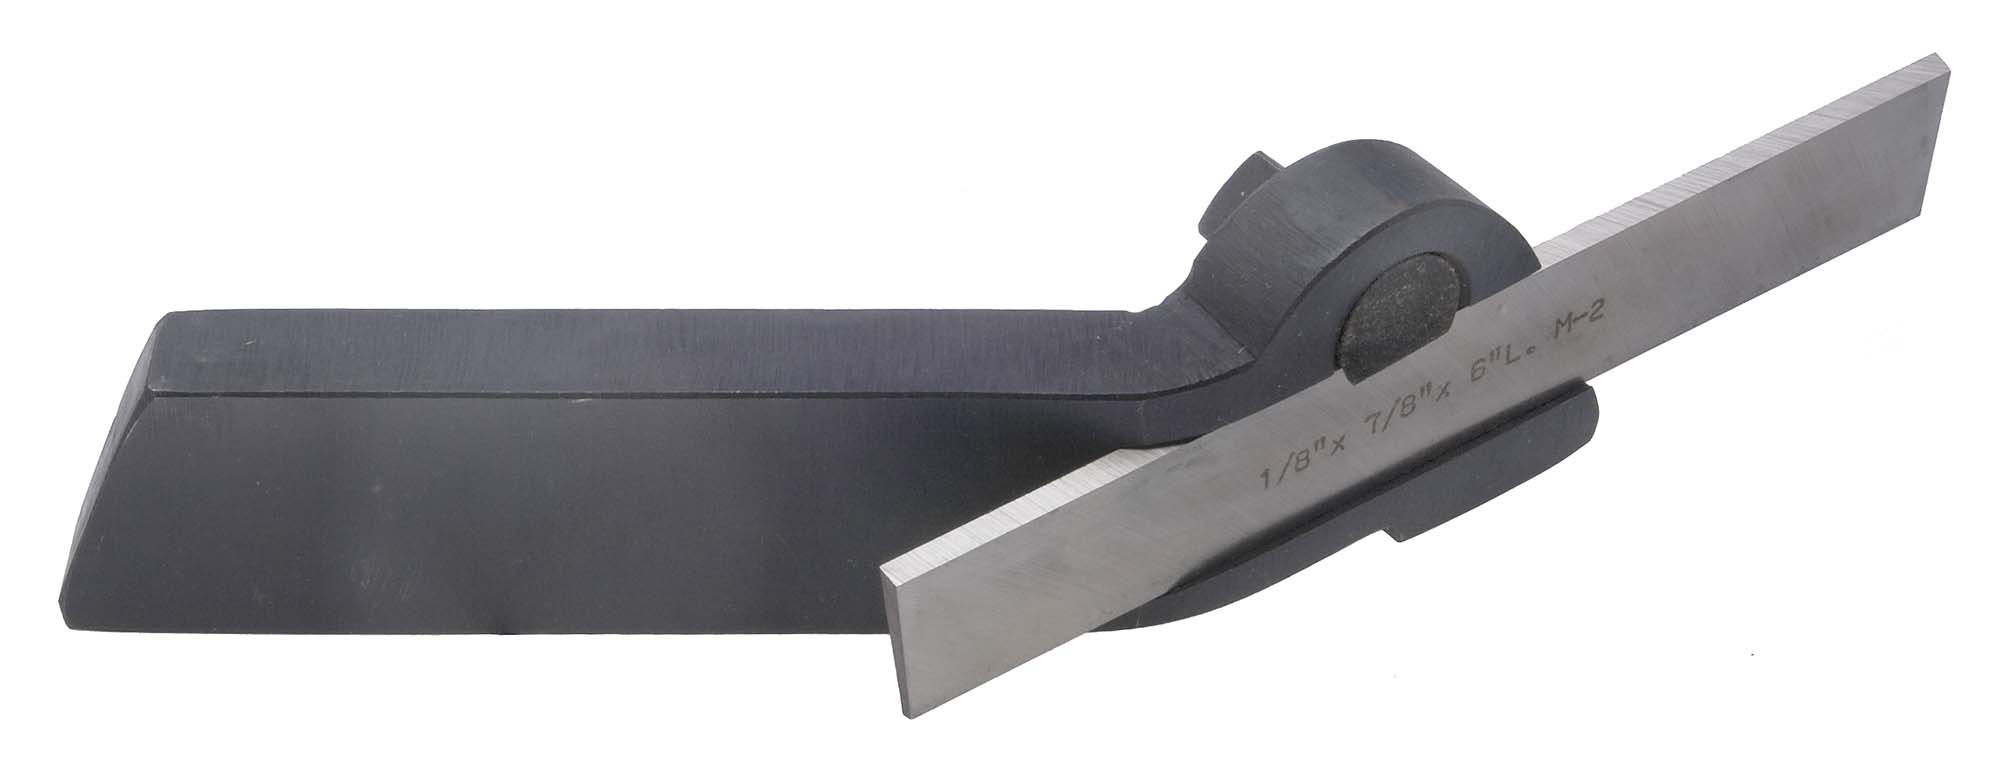 5/16 X 13/16 Shank Left Hand Lathe Cutoff Tool Holder, holds 3/32 x 1/2" Blades